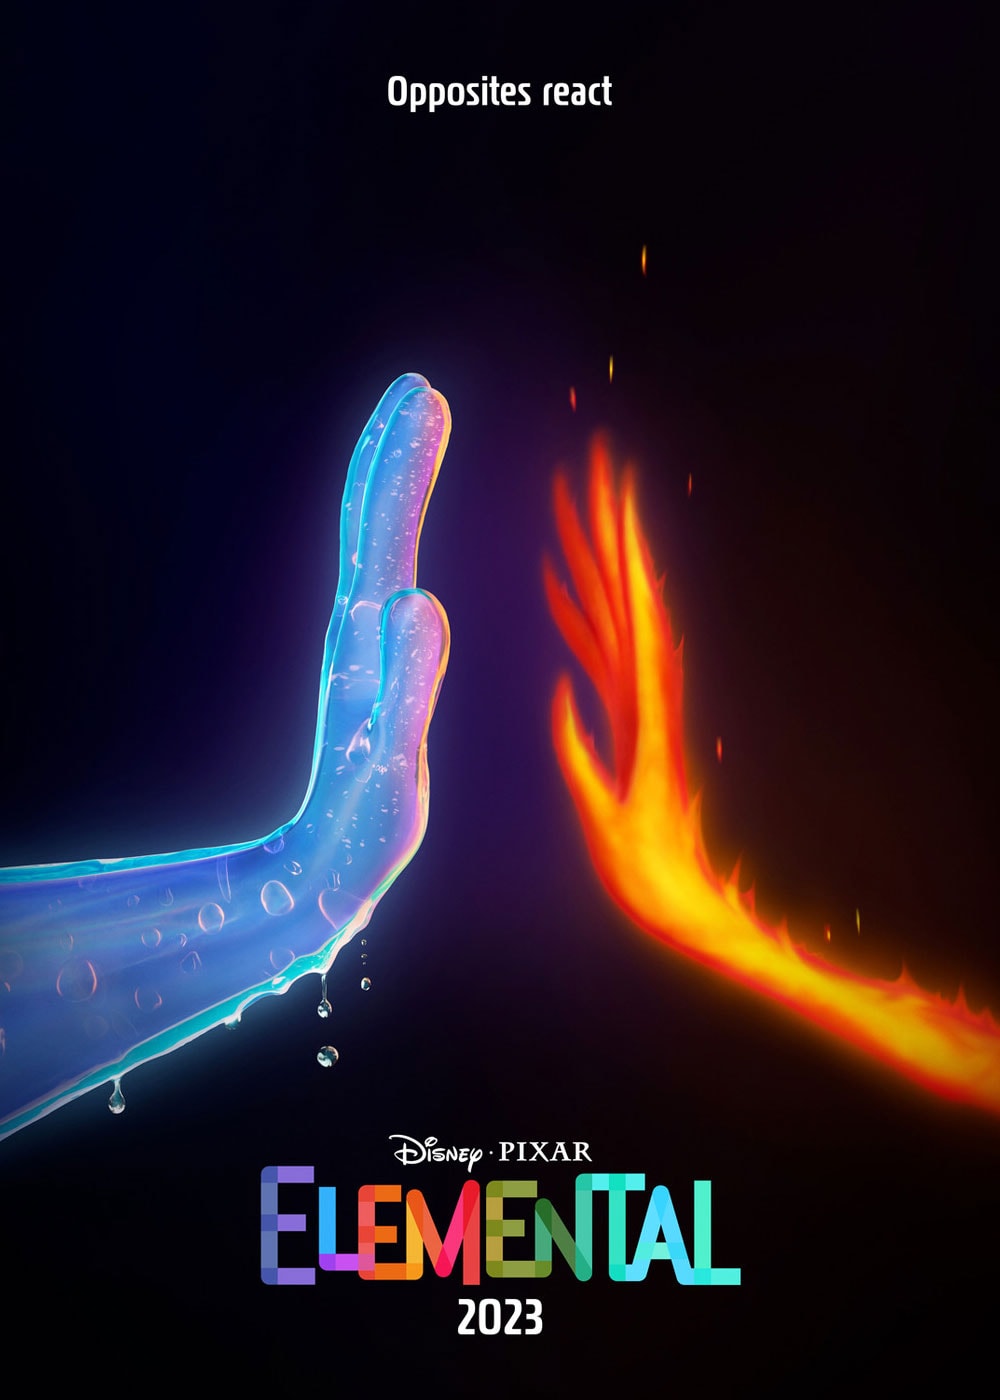 Elemental Movie (2023) Release Date, Review, Cast, Trailer, Watch